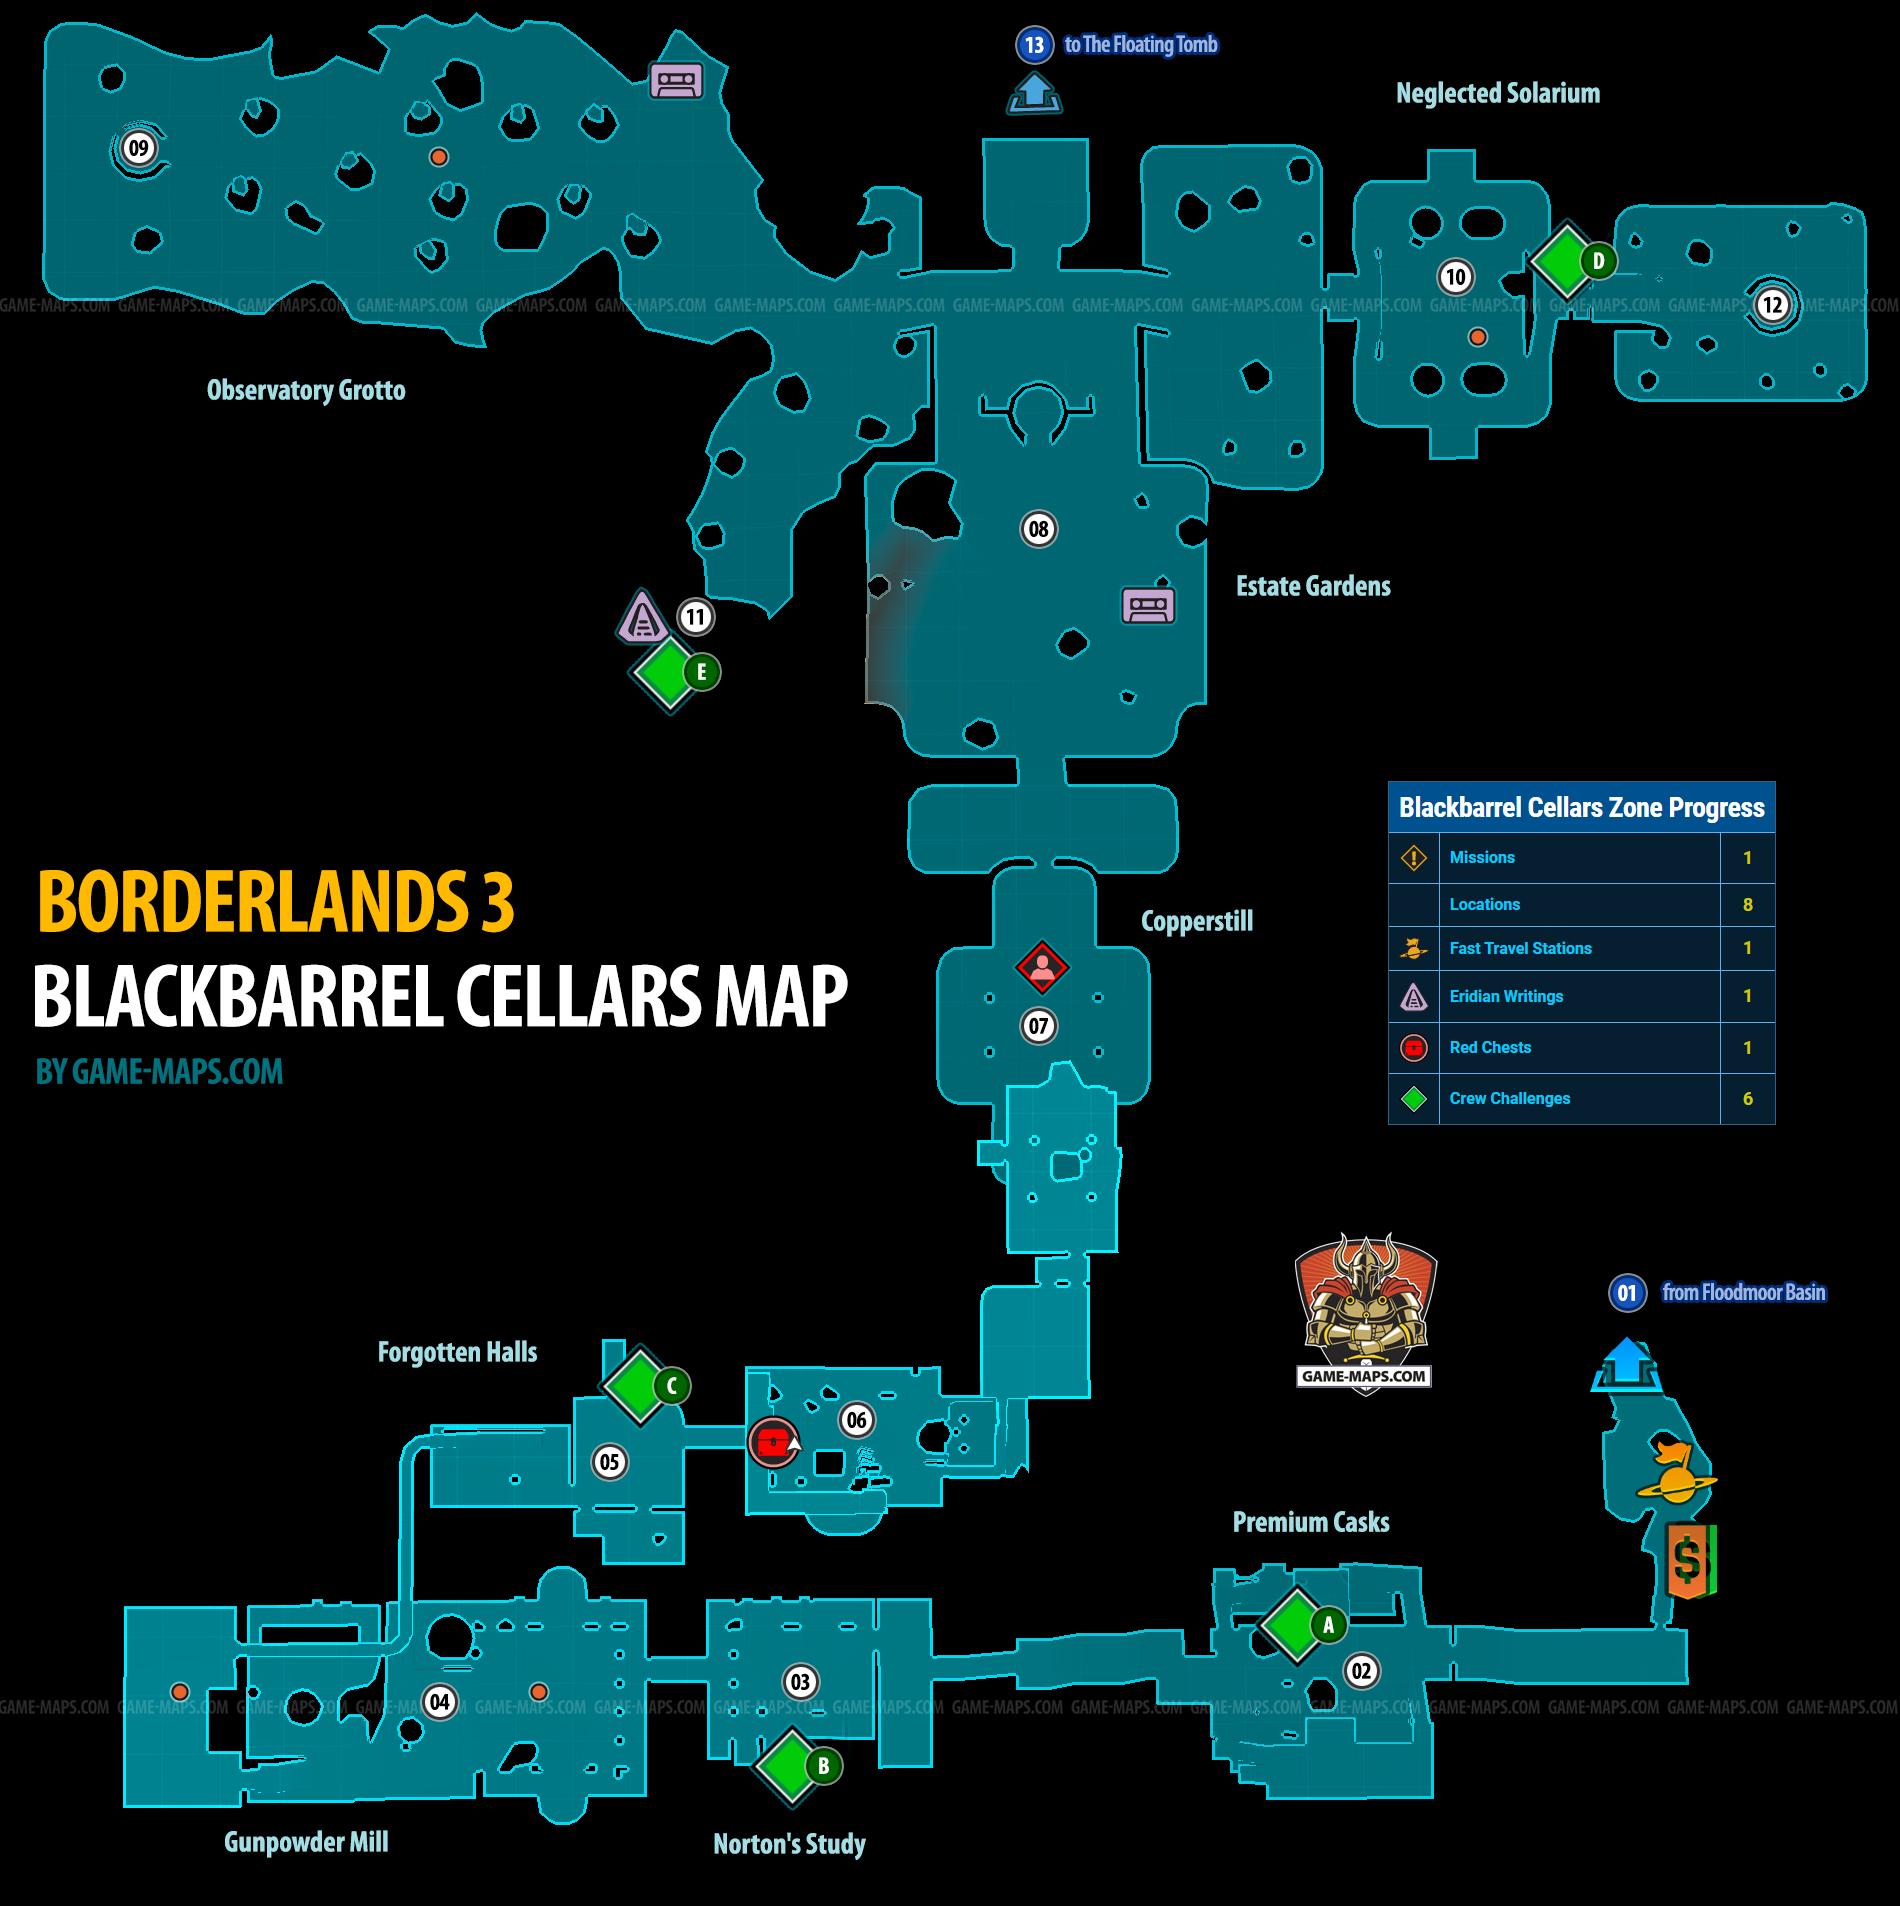 Blackbarrel Cellars Map on Eden-6 Planet for Borderlands 3